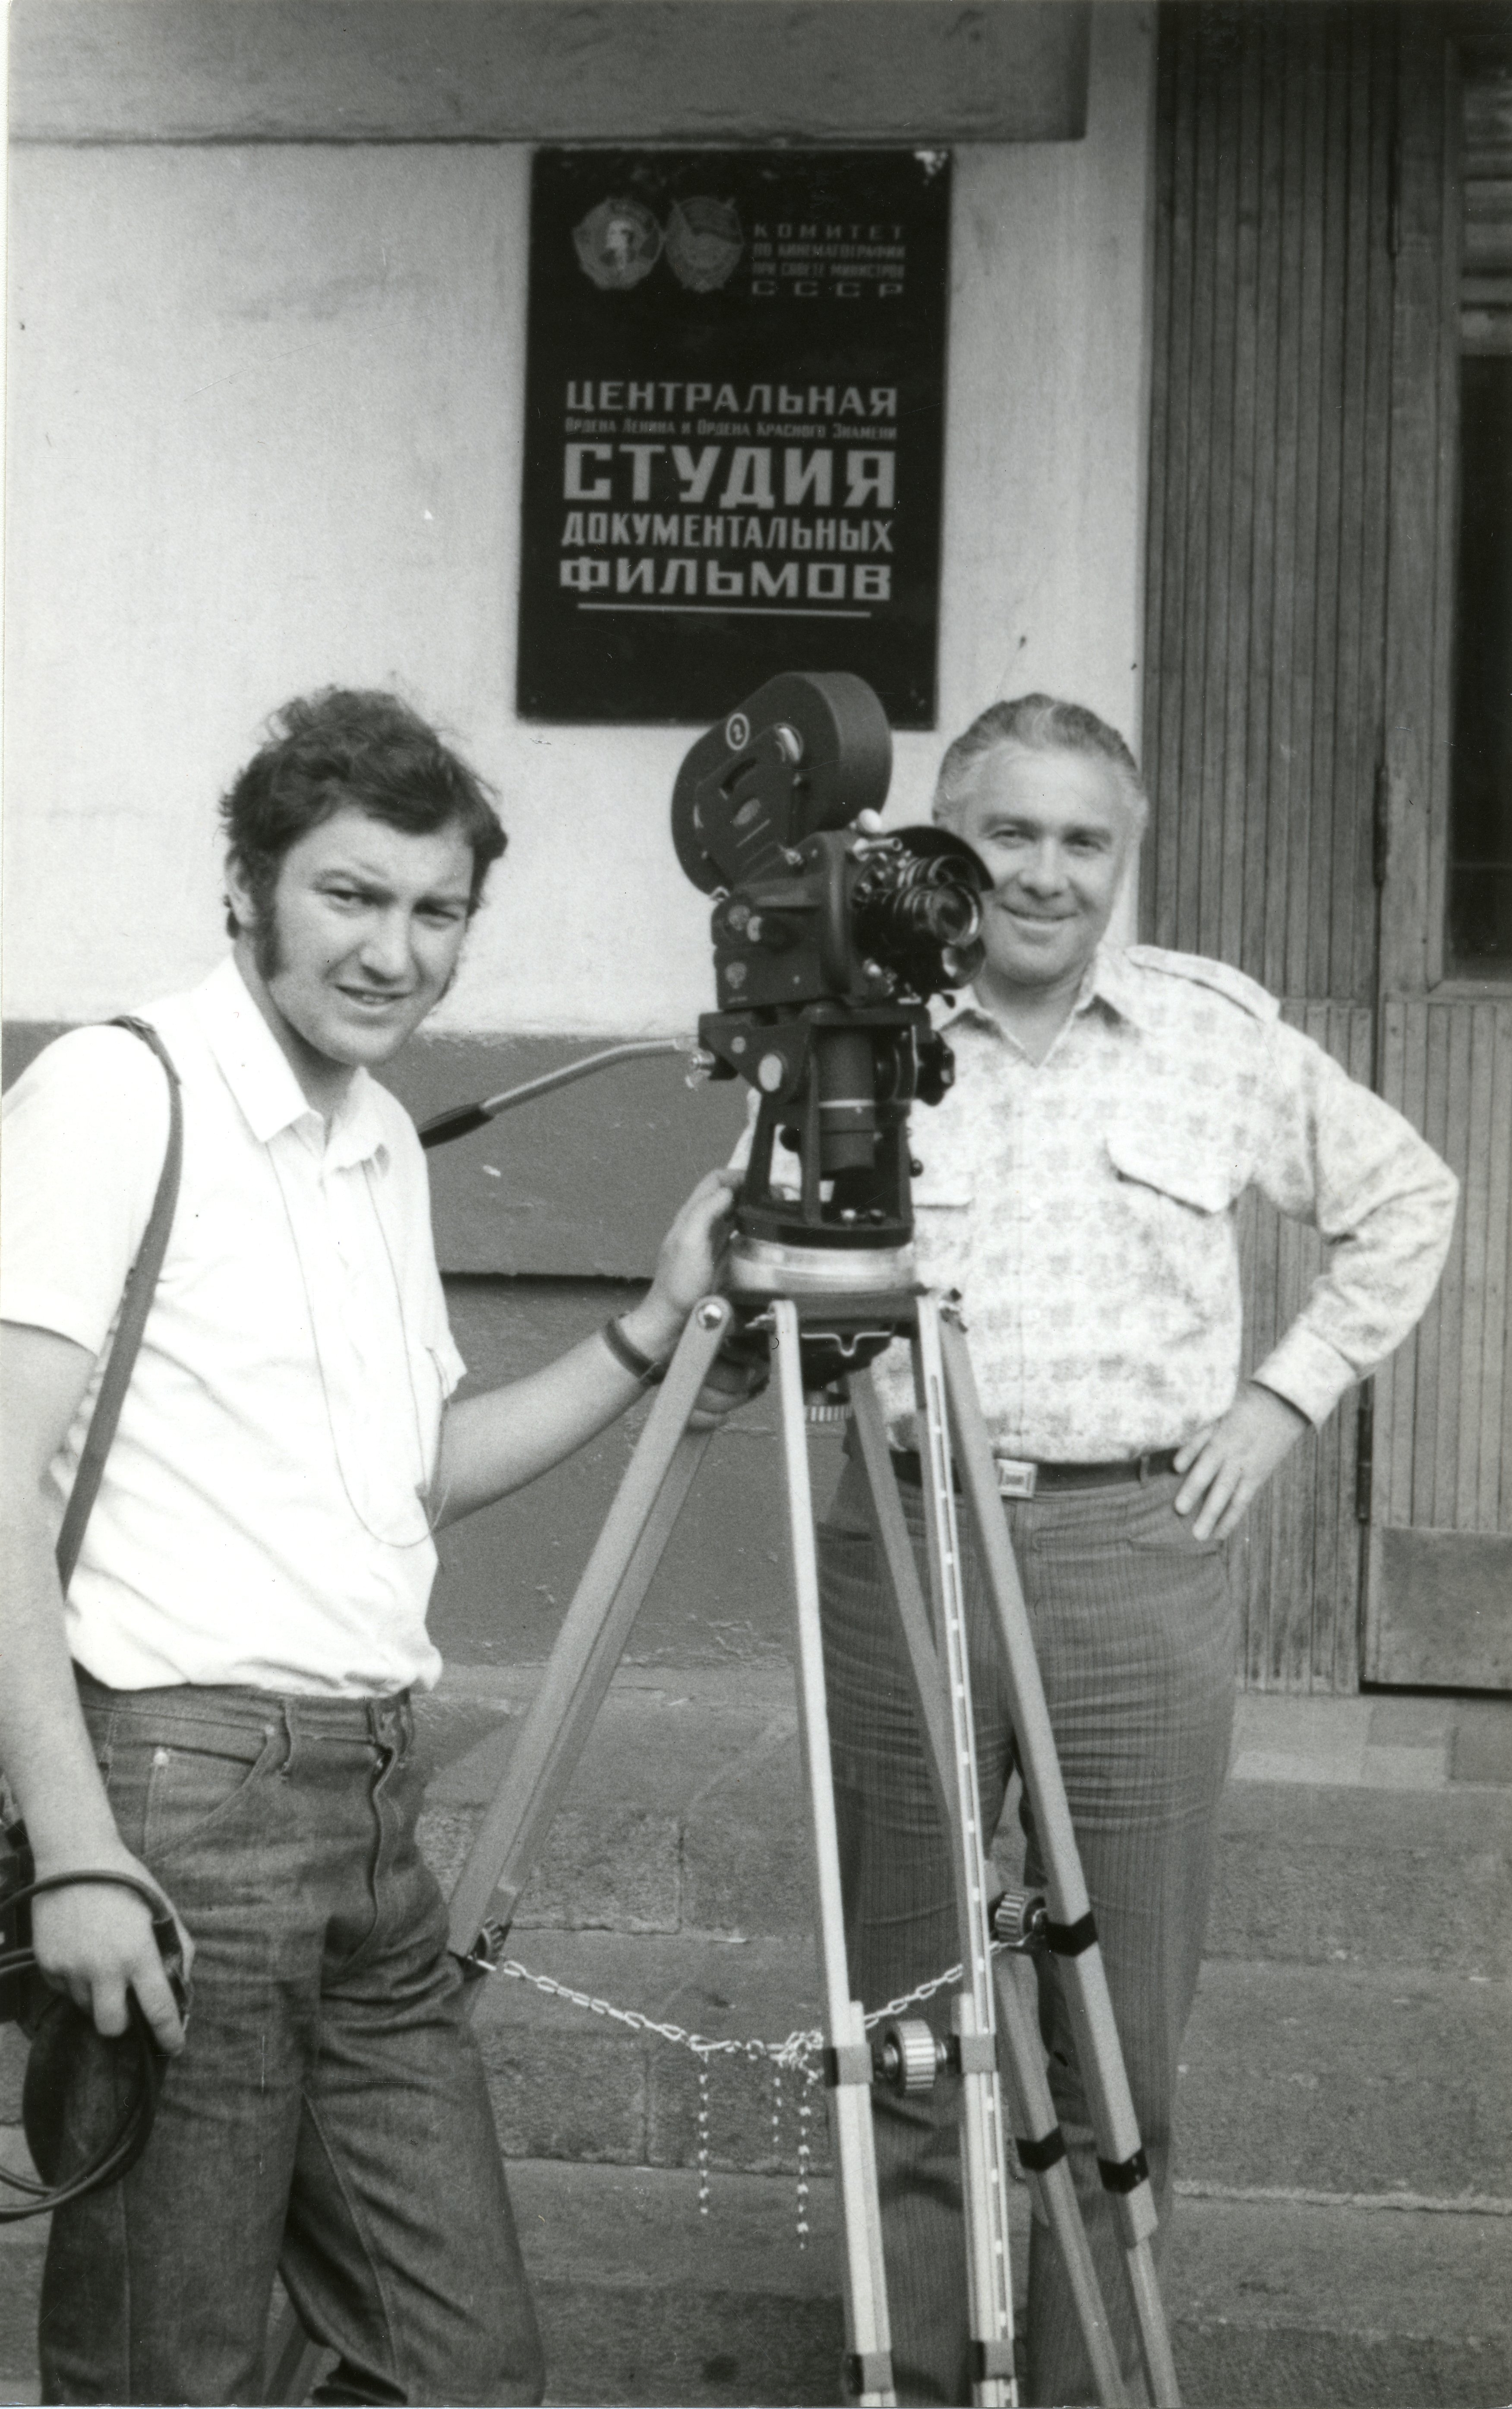 EFA 0-332904. Filmioperaatorid Viktor (vasakul) ja Semjon Školnikov Moskvas. Foto: autor teadmata, 1972 